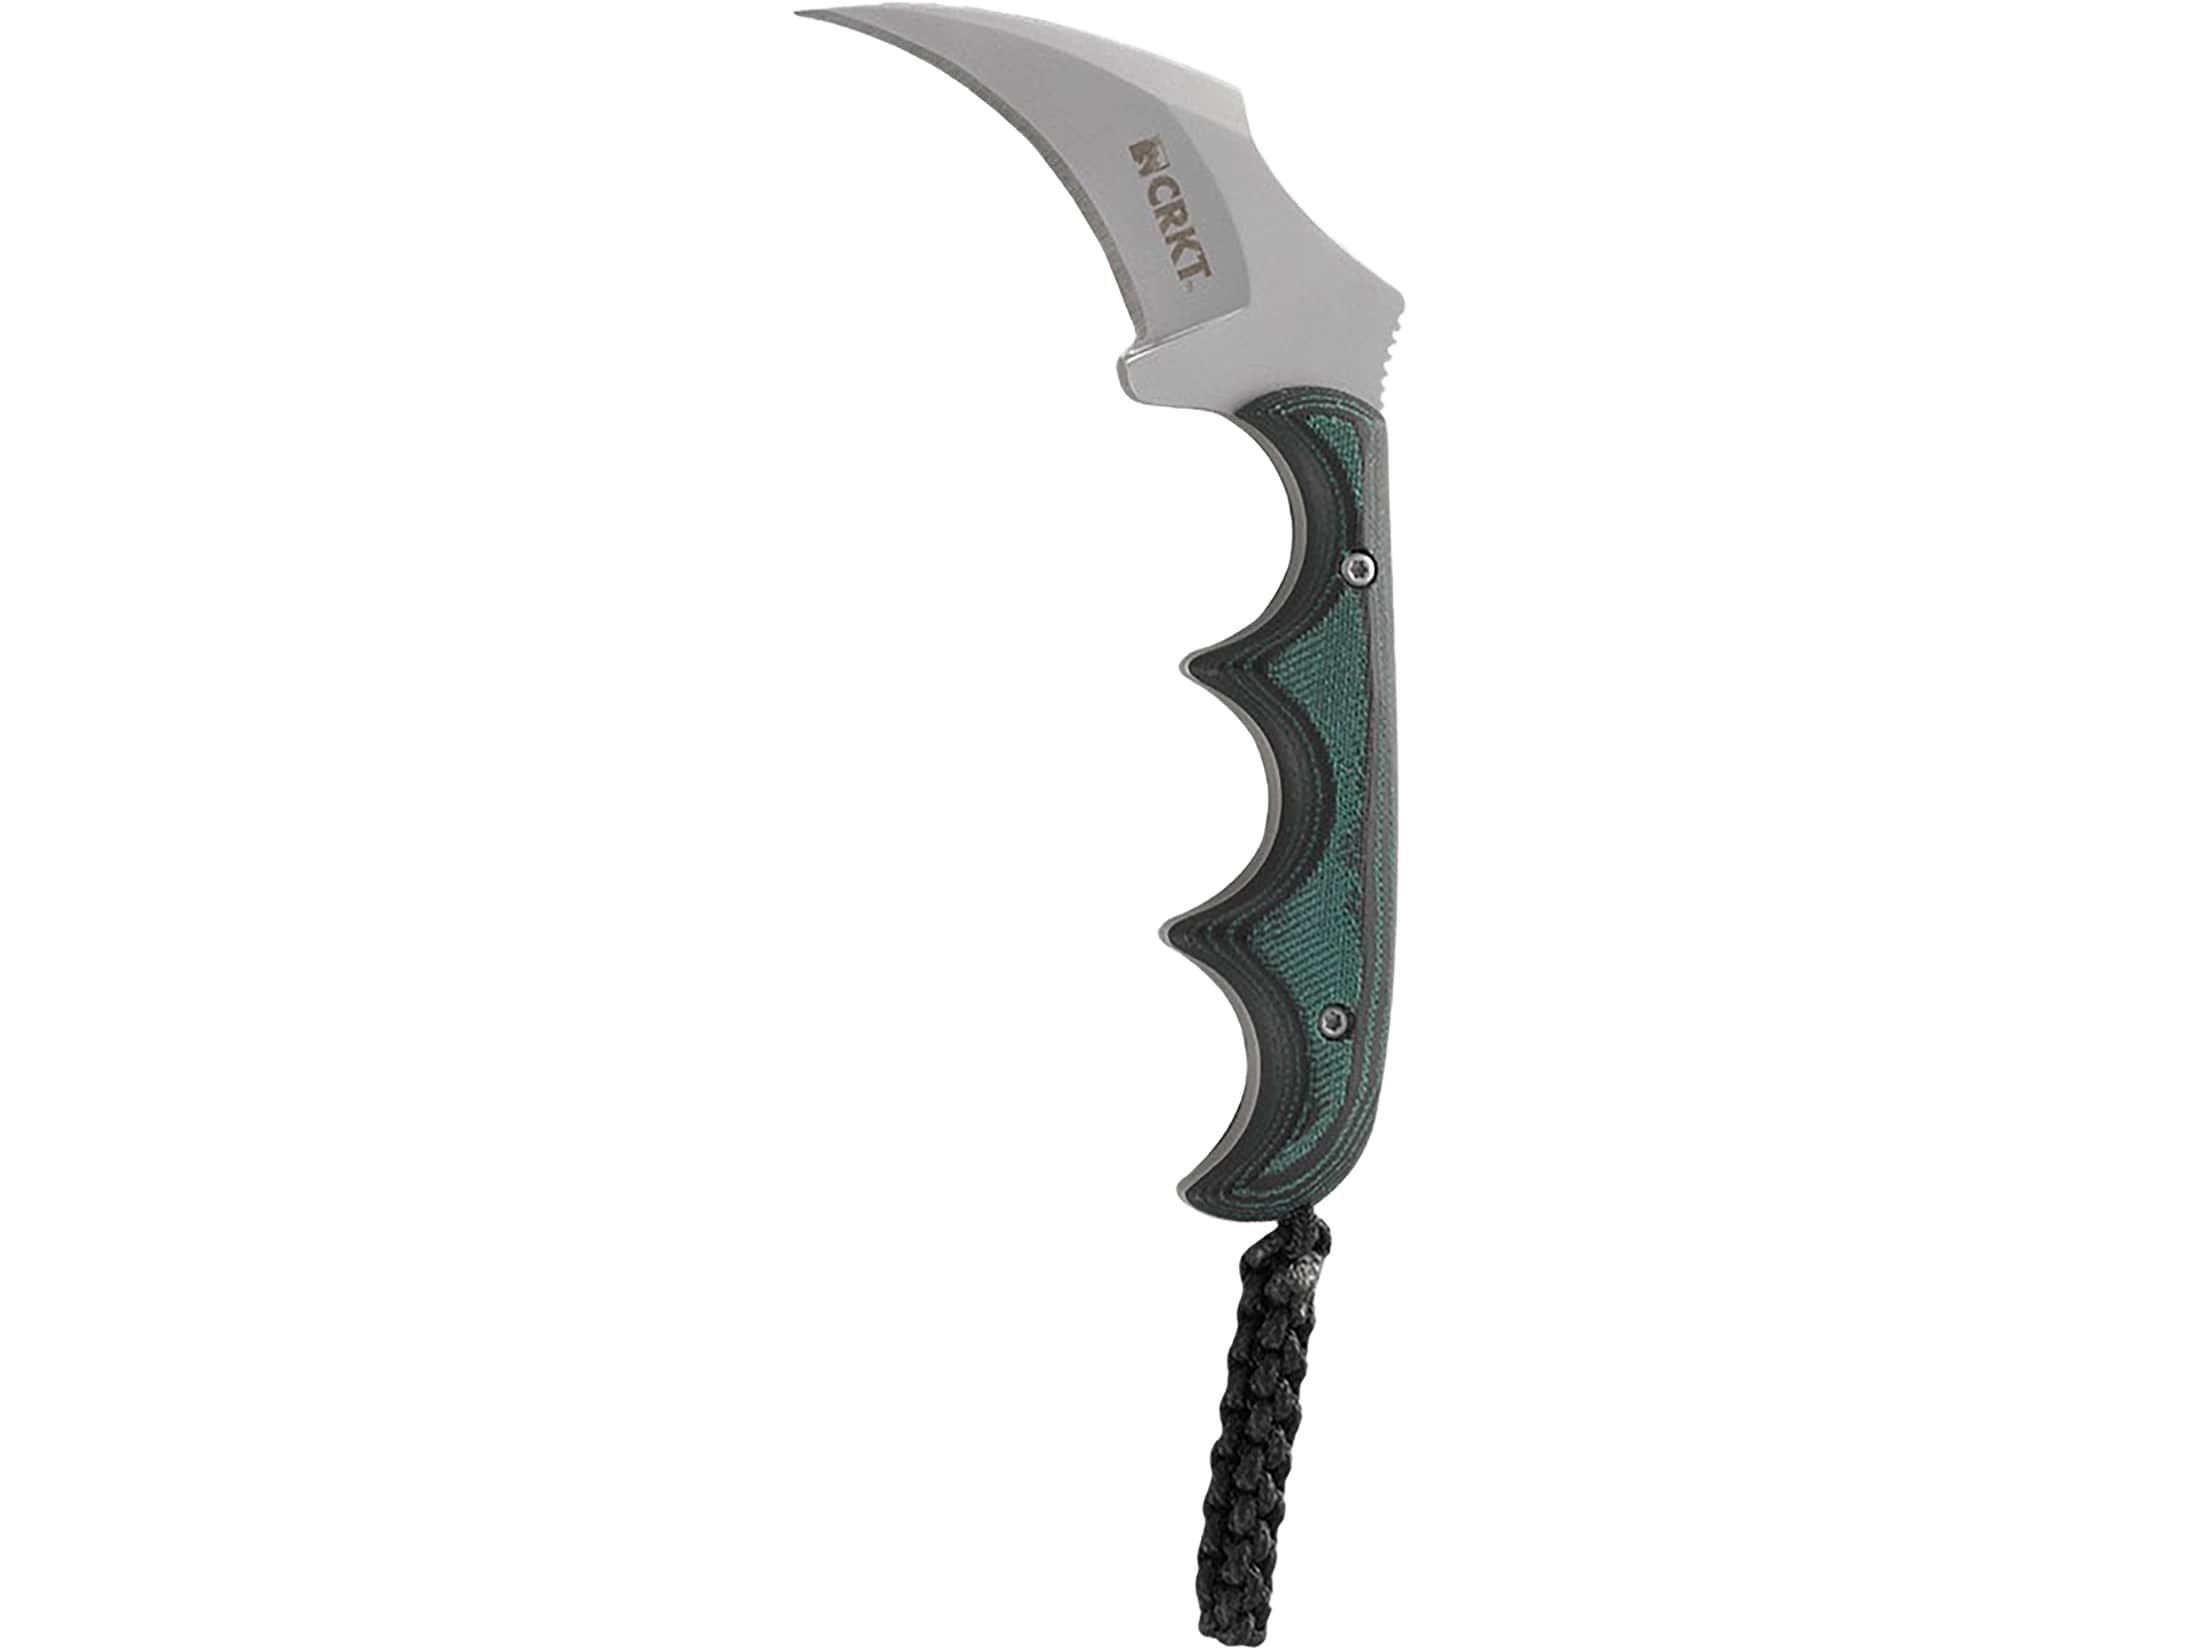 Transform your dull Katana into a razor sharp blade with the Tumbler R, 0 knife sharpness